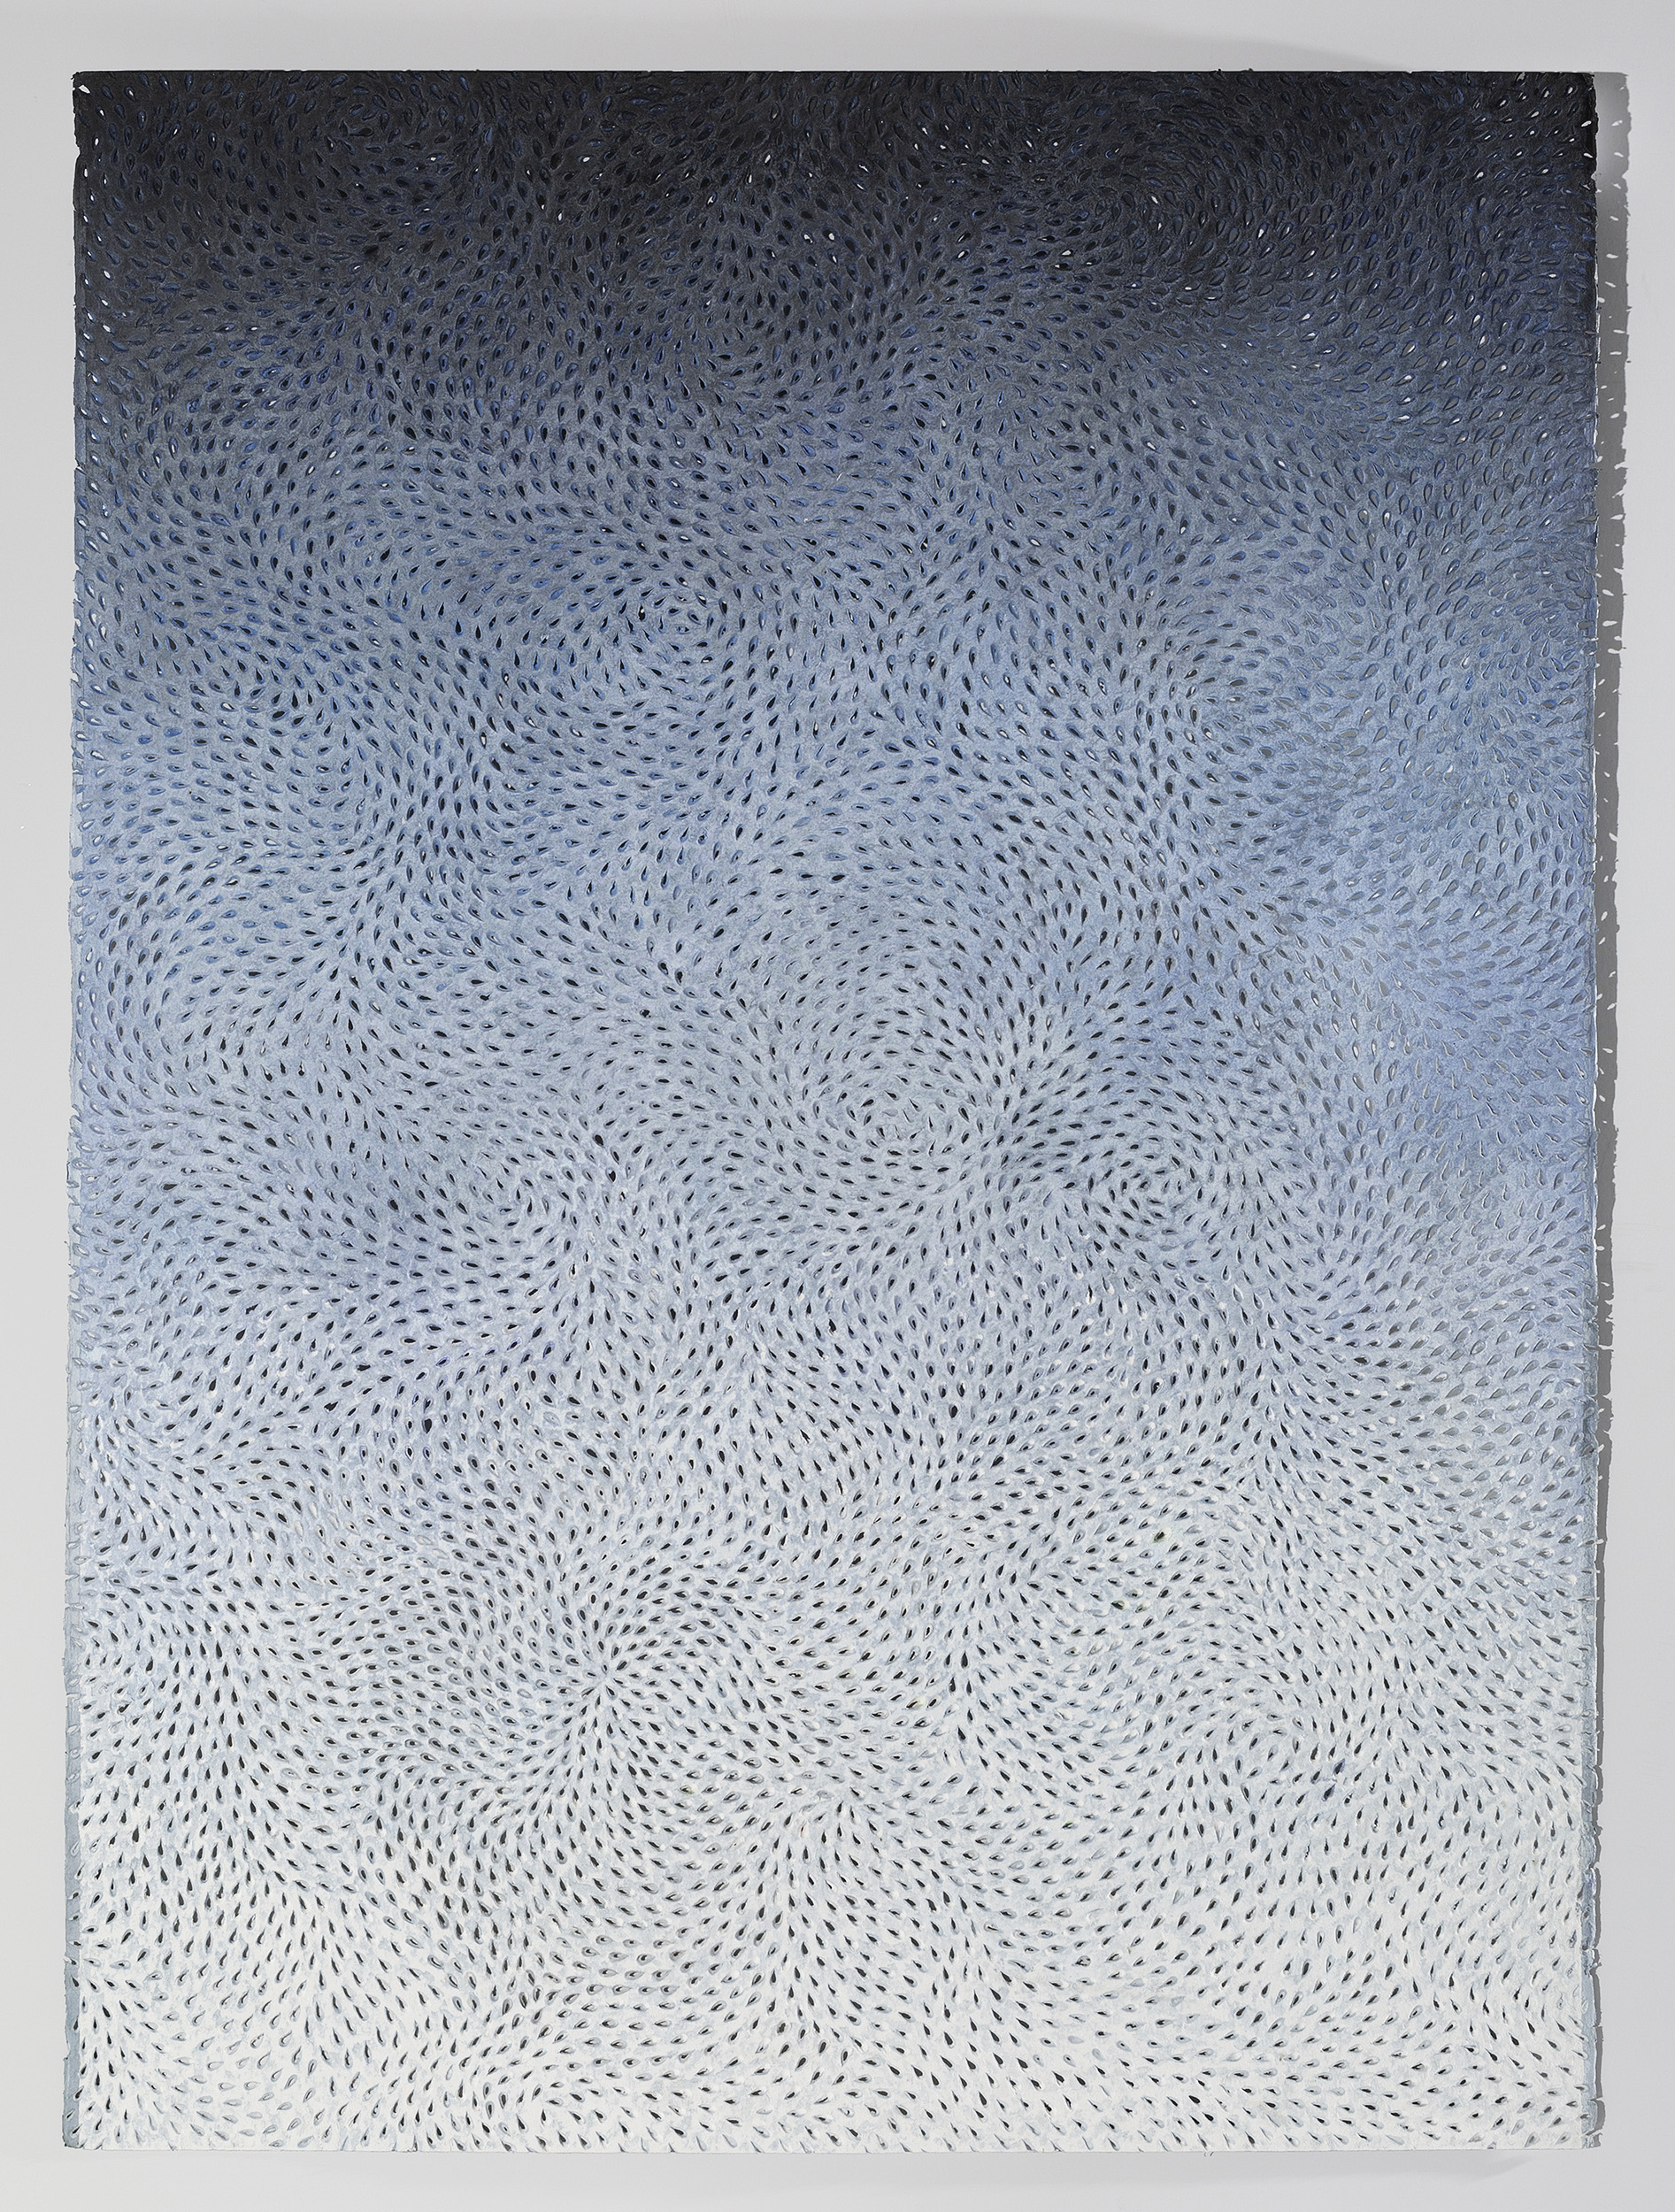 Melinda Schawel 'Fluid' ink, graphite on torn, perforated paper 105 x 75cm $6,600 SOLD